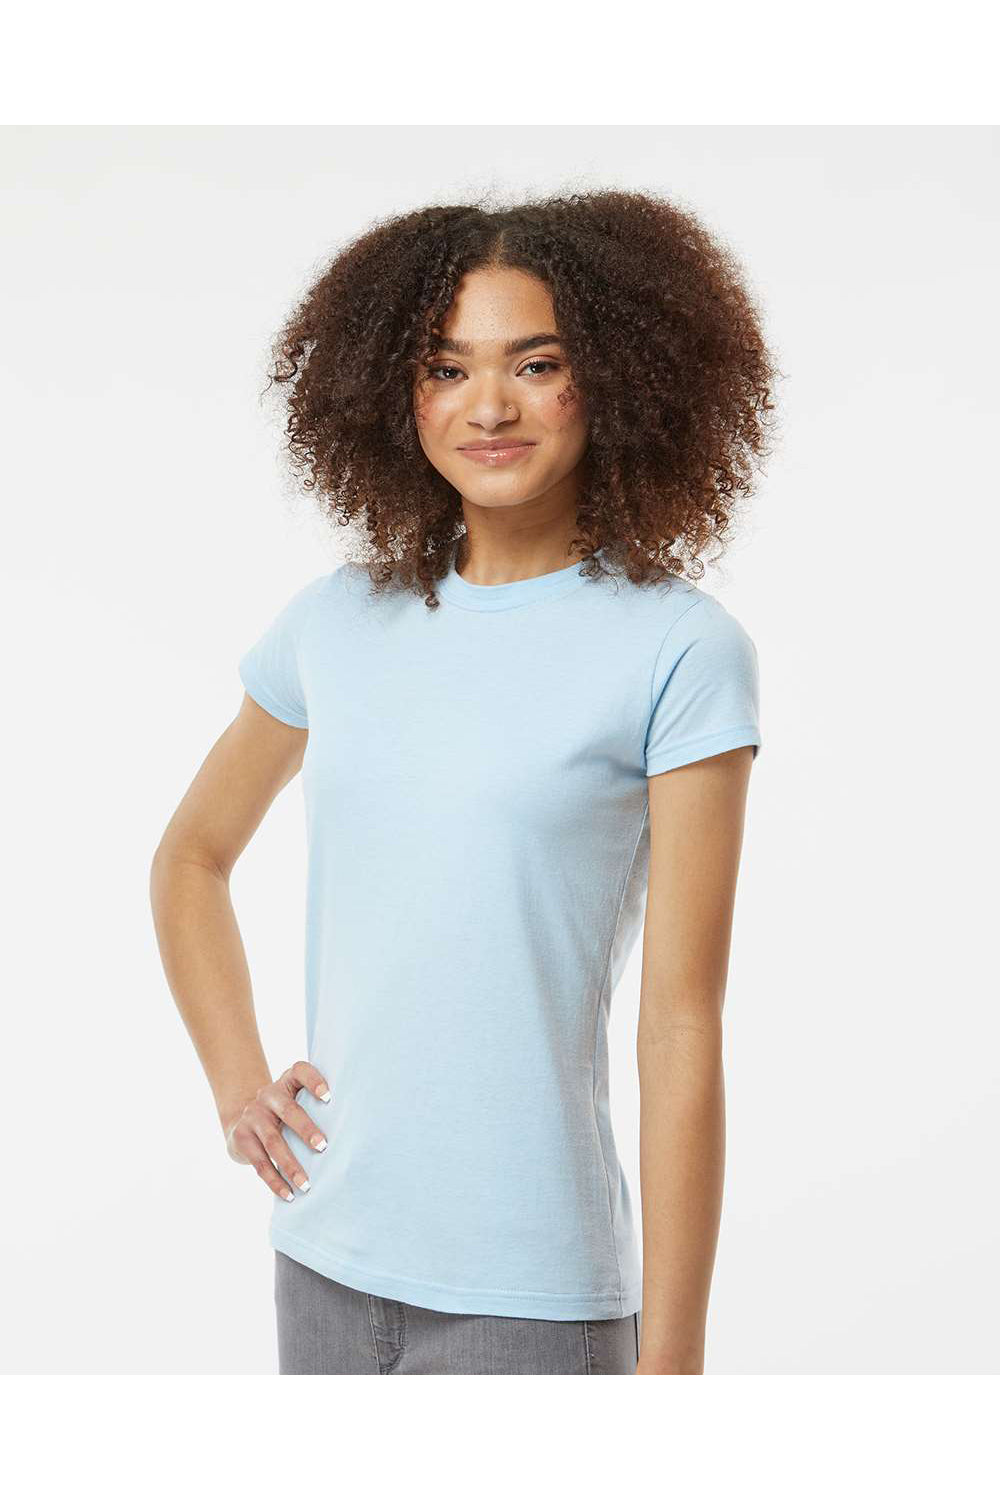 Tultex 213 Womens Fine Jersey Slim Fit Short Sleeve Crewneck T-Shirt Baby Blue Model Side